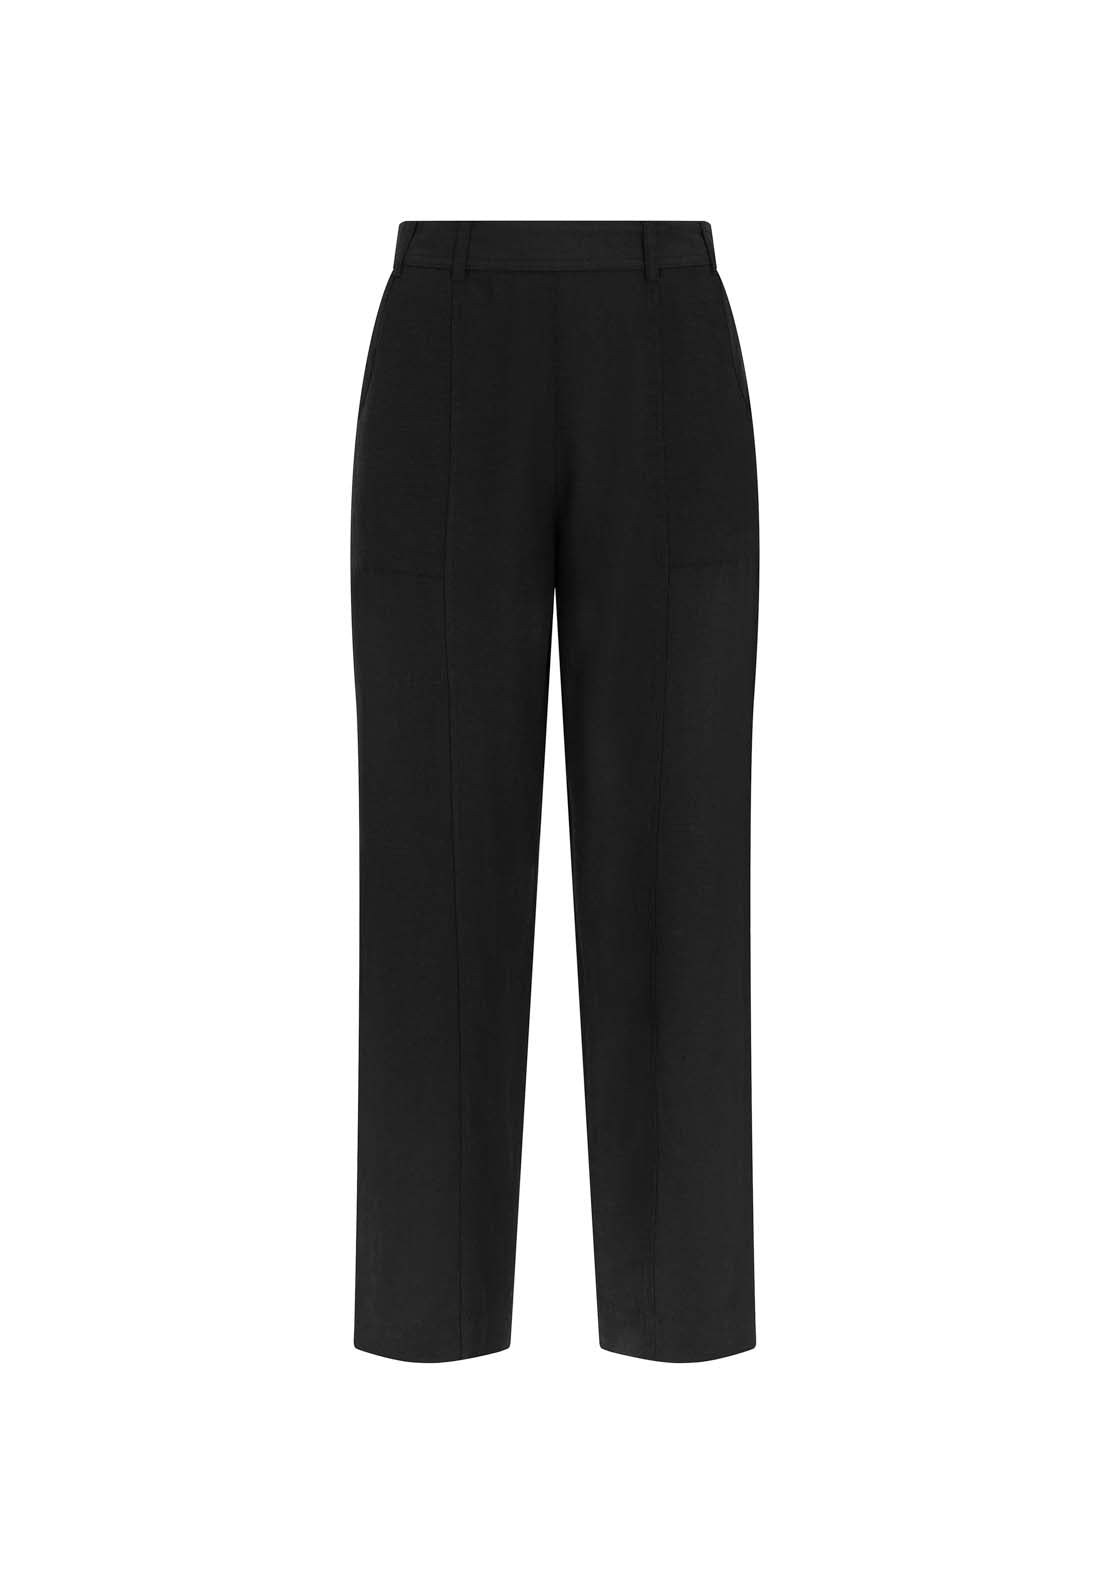 Tigiwear Linen Blend Black Trousers 3 Shaws Department Stores